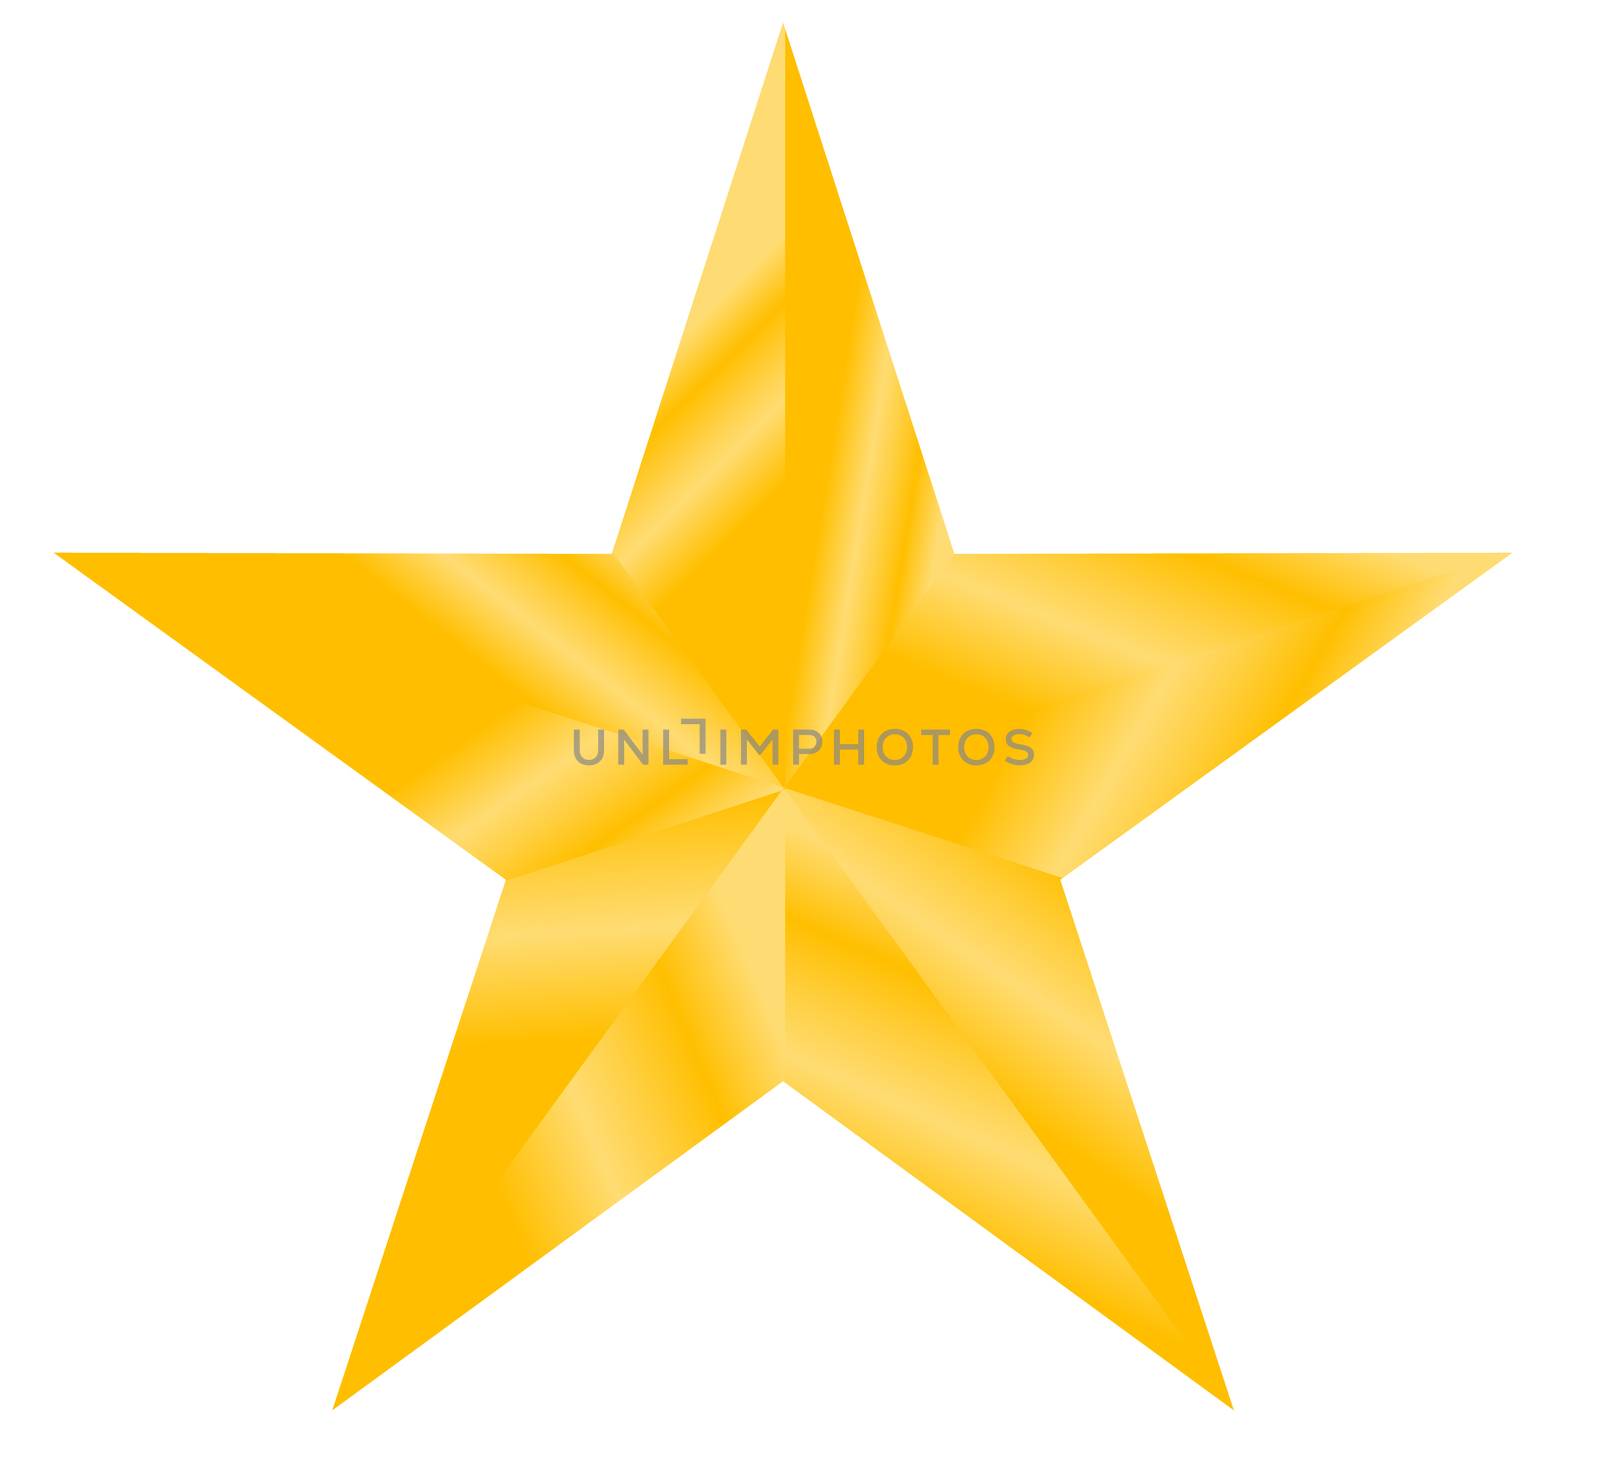 gold star sign. gold star on white background. 